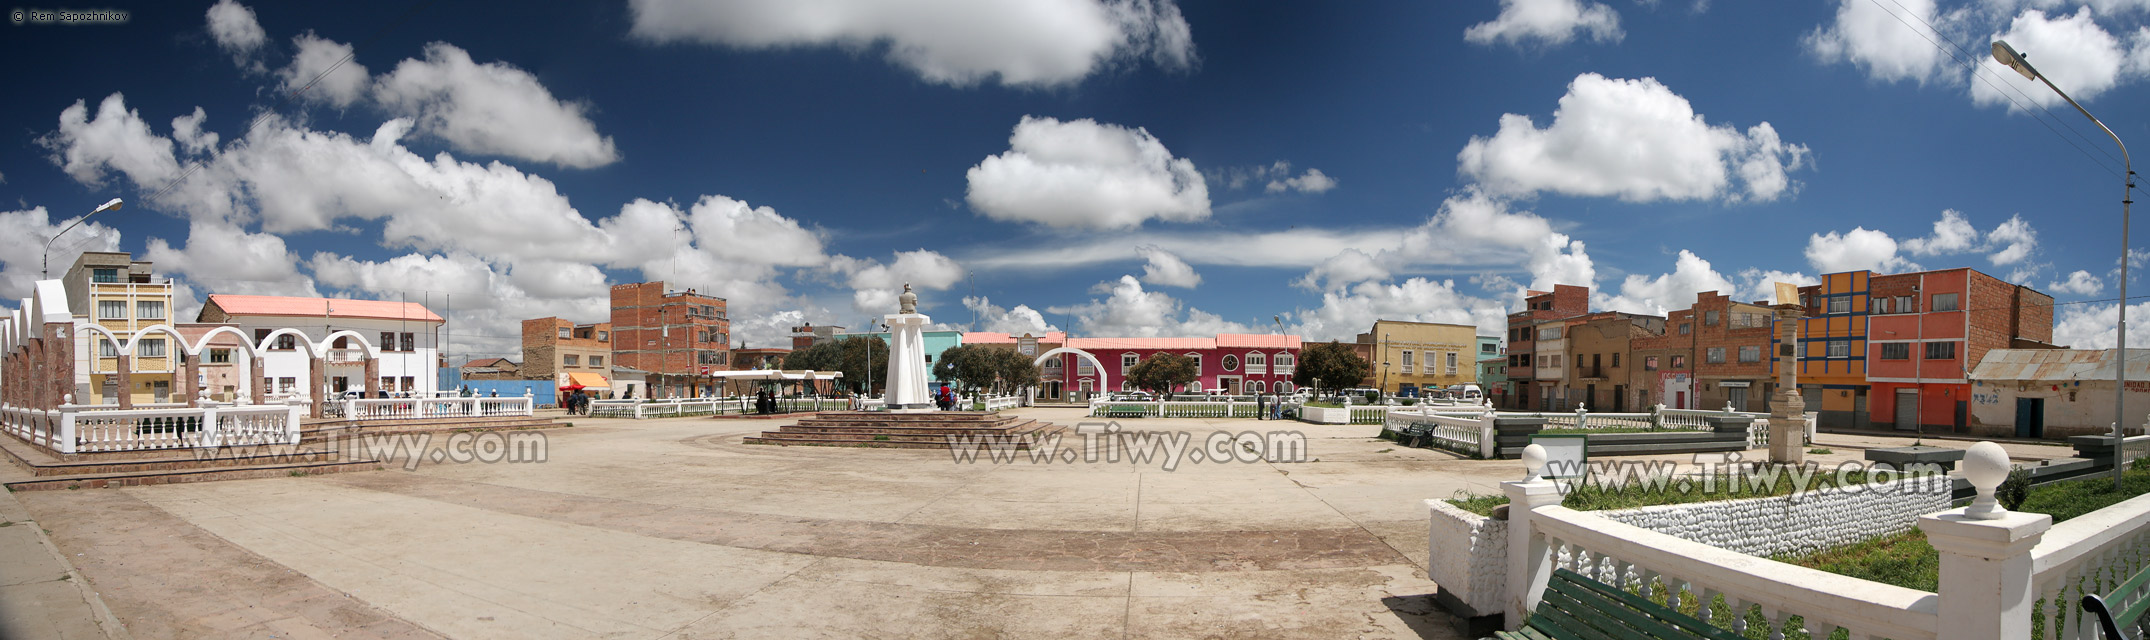 Вид на главную площадь Лаха со стороны церкви